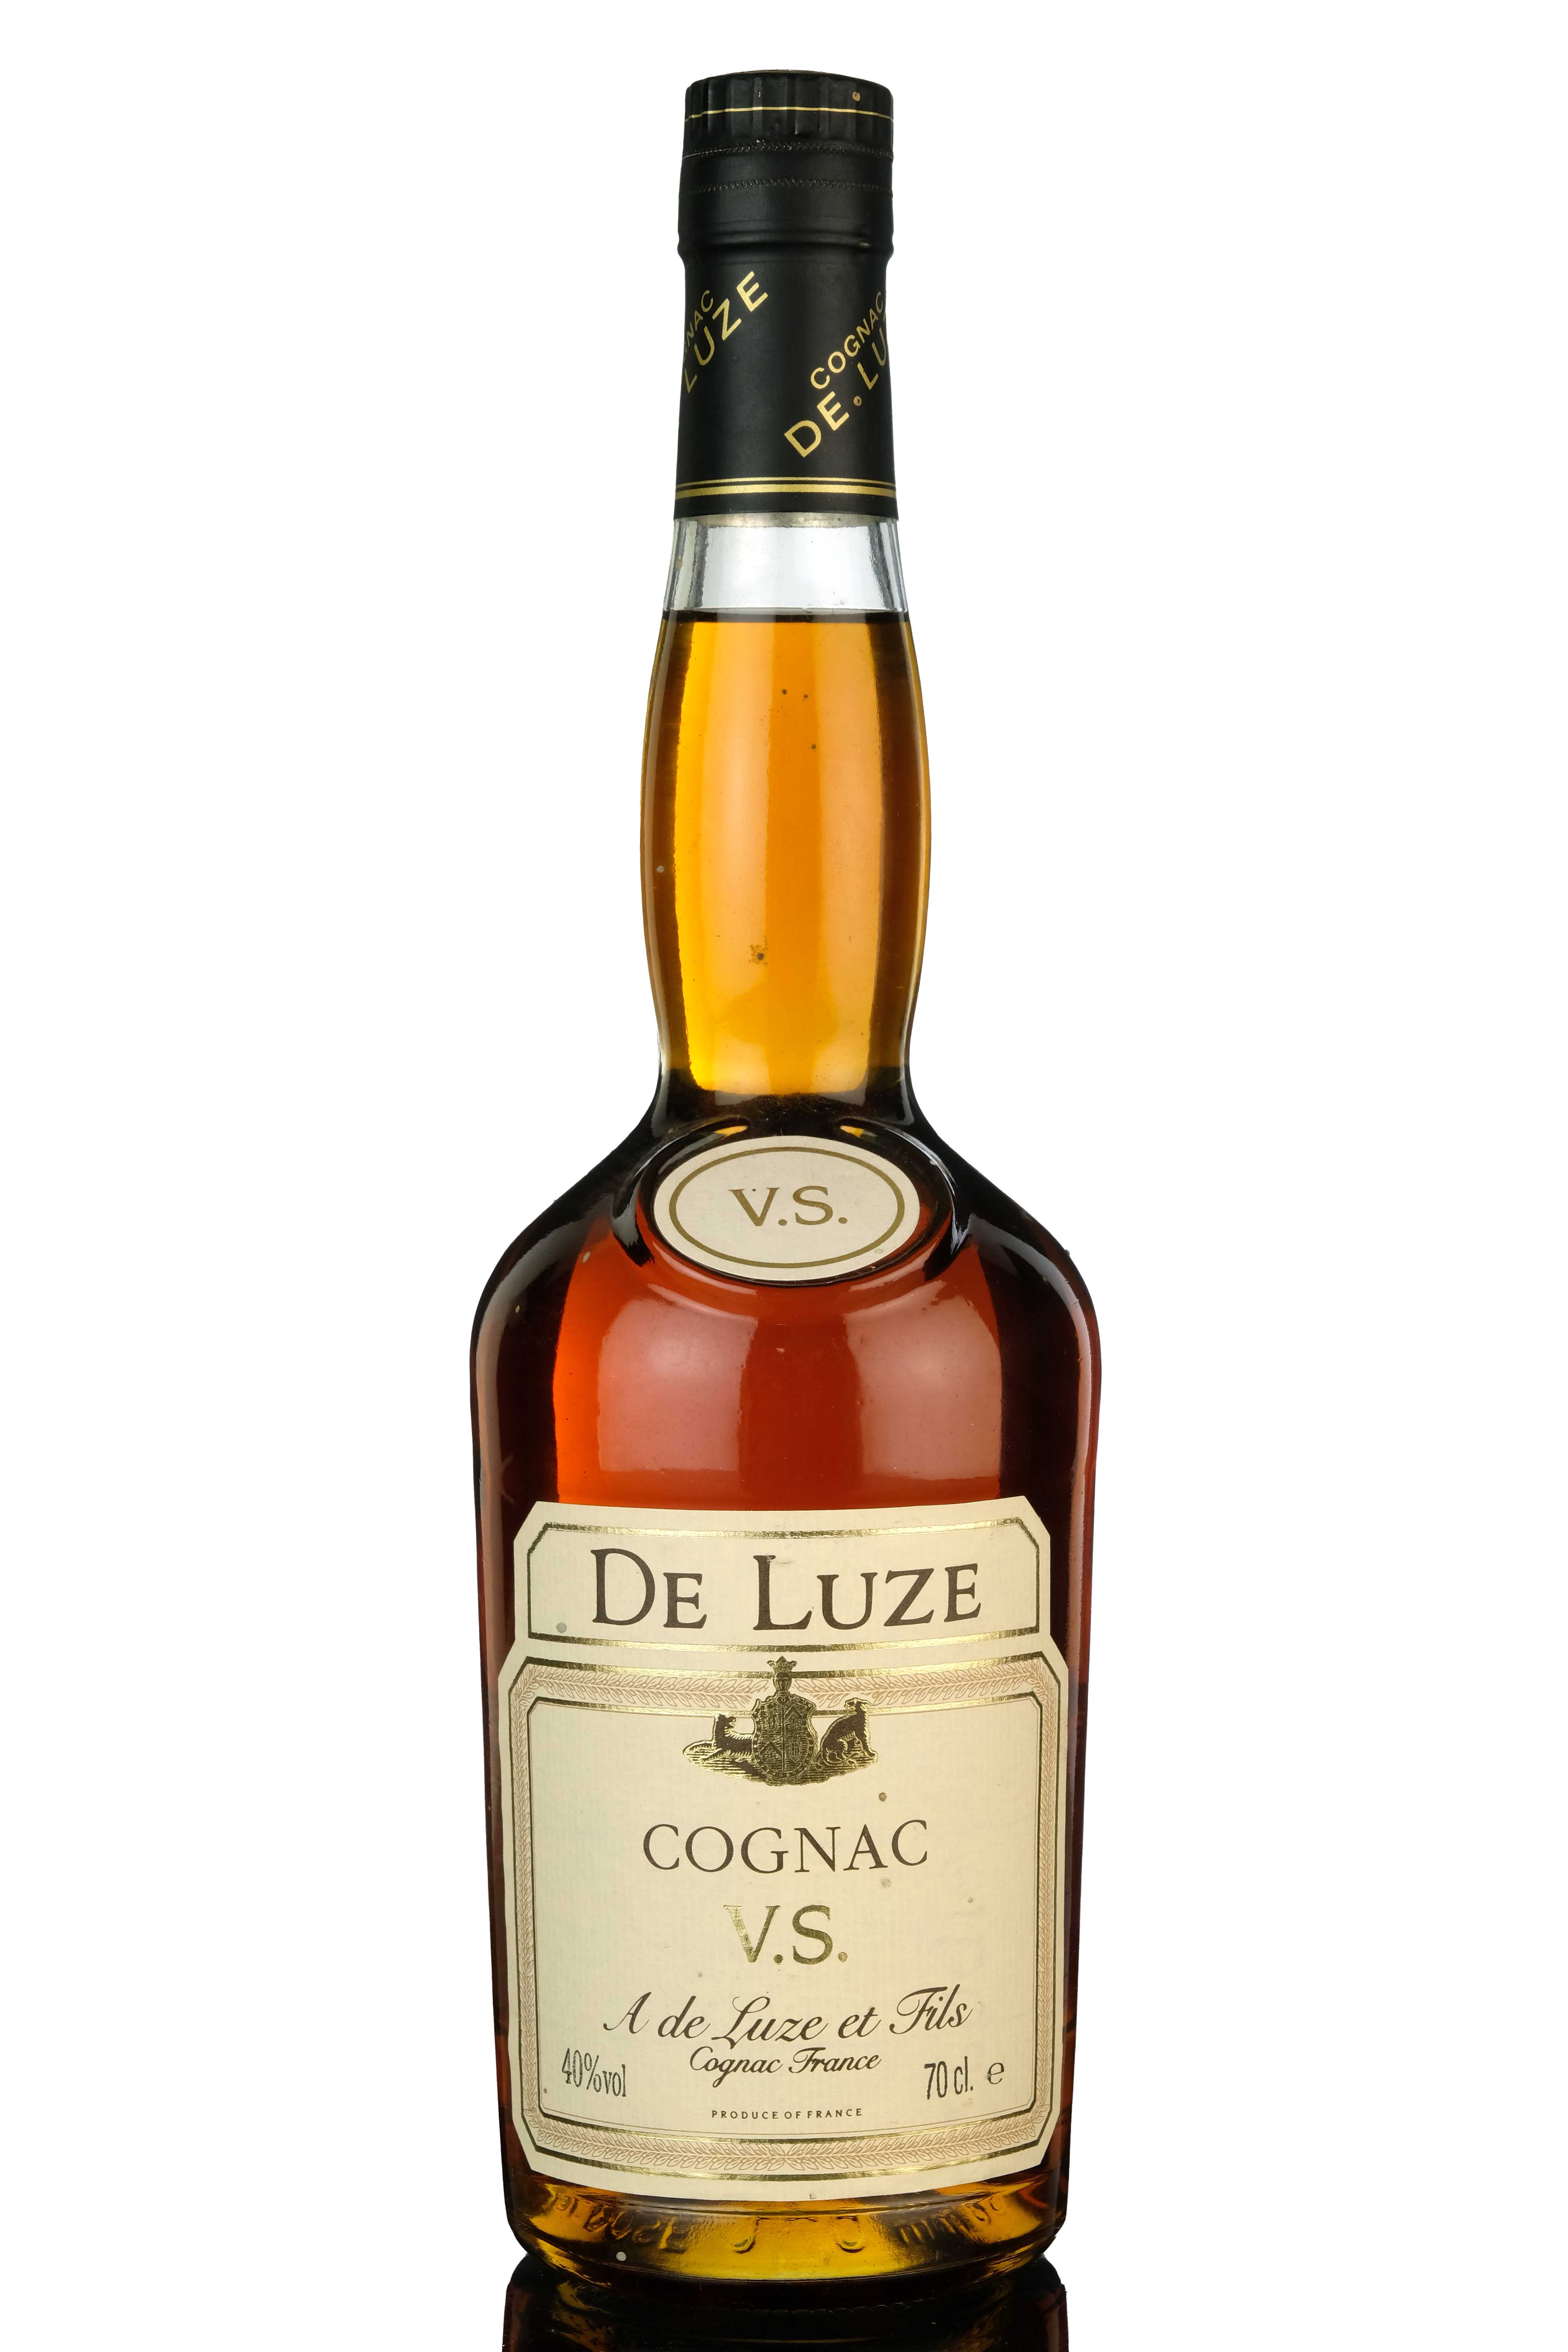 Del Luze VS Cognac